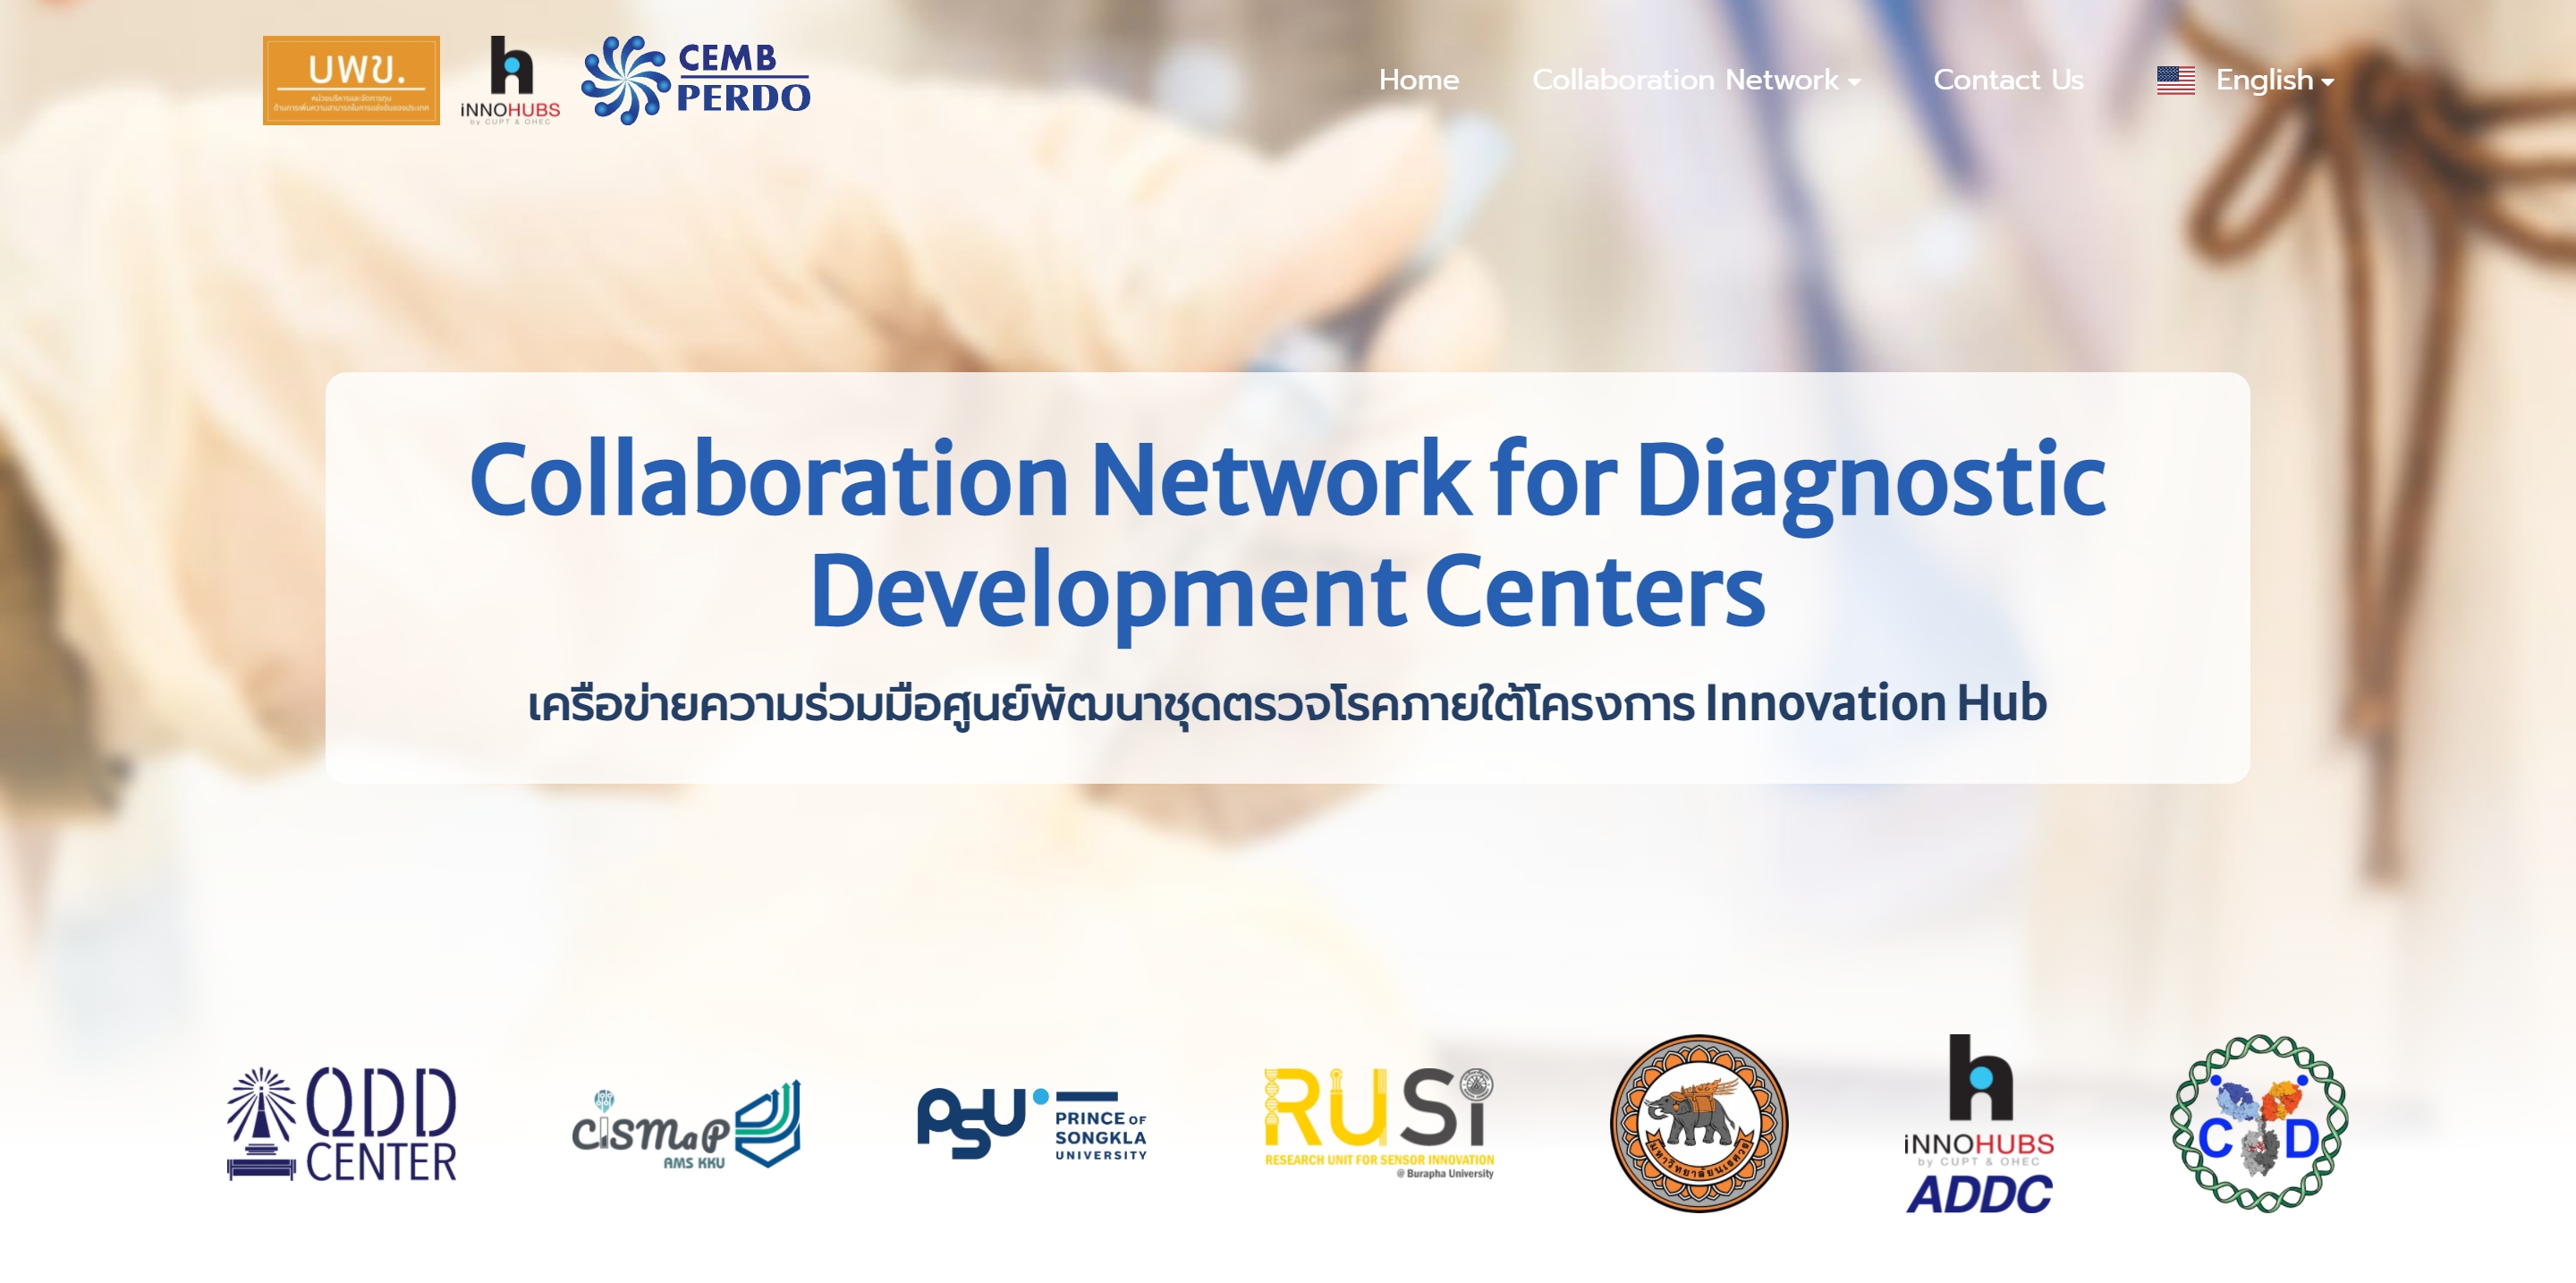 Collaboration Network for Diagnostic Development Centers; CNDC